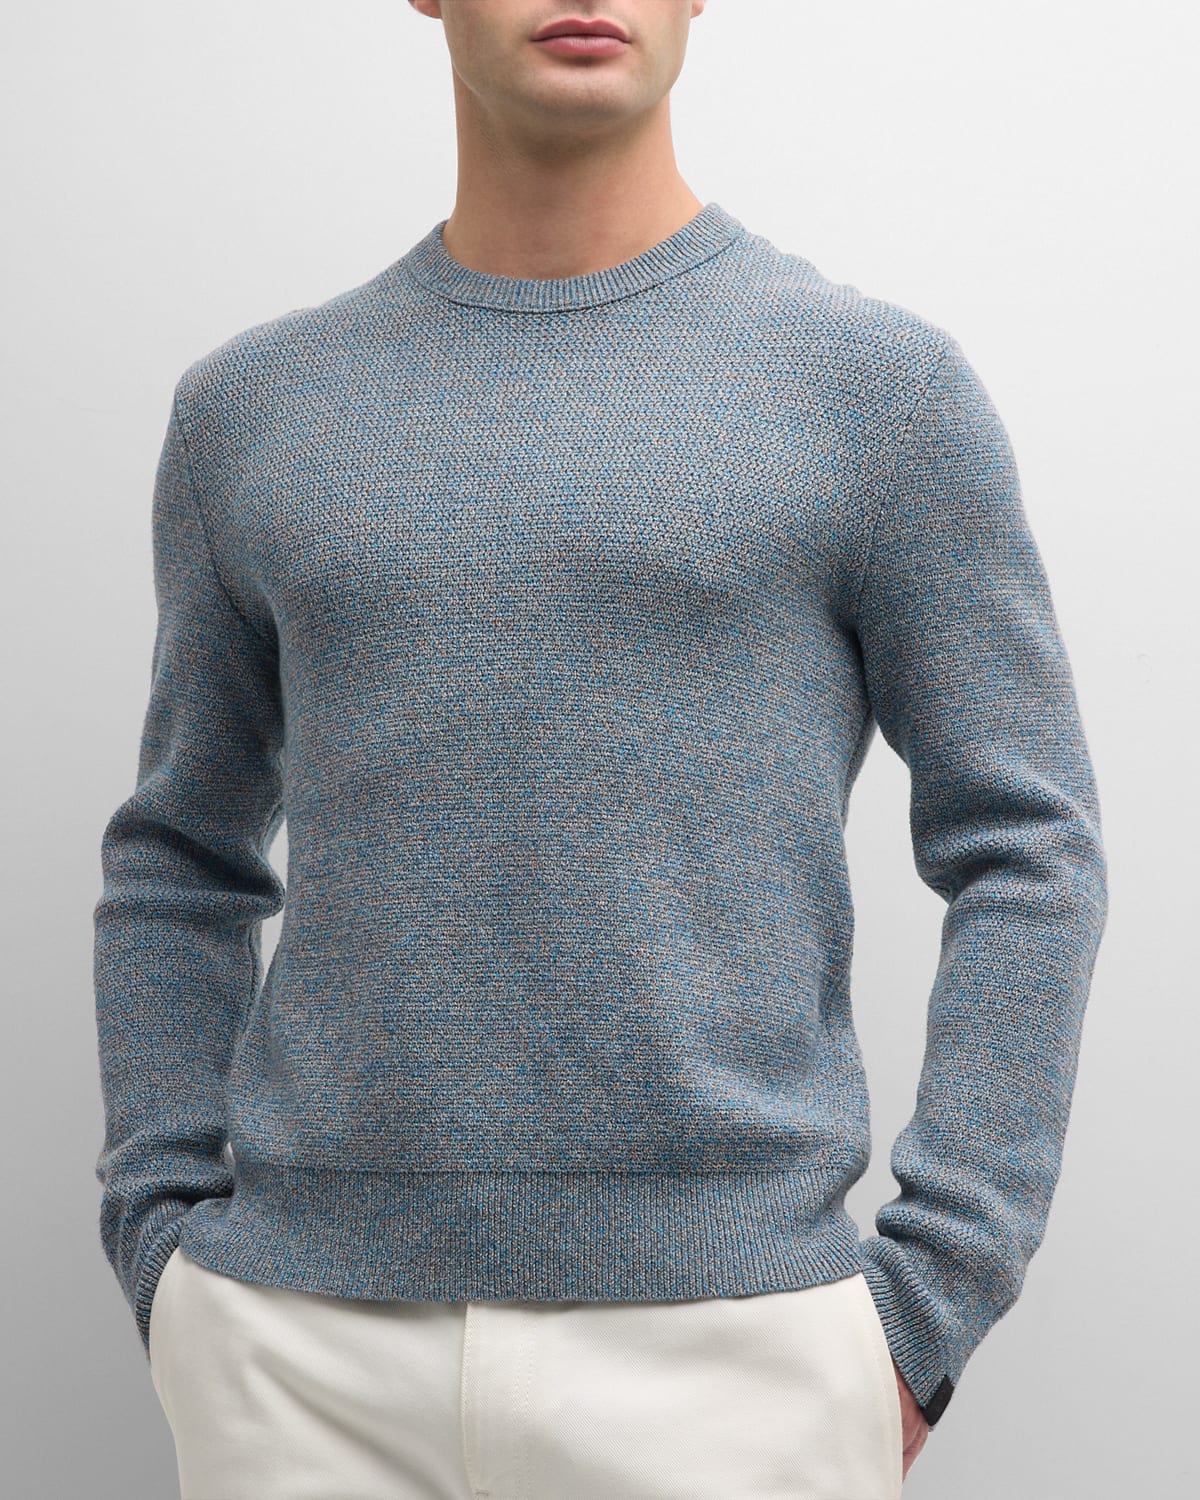 Rag & Bone Dexter Cotton Blend Marled Classic Fit Crewneck Sweater In Blue Multi